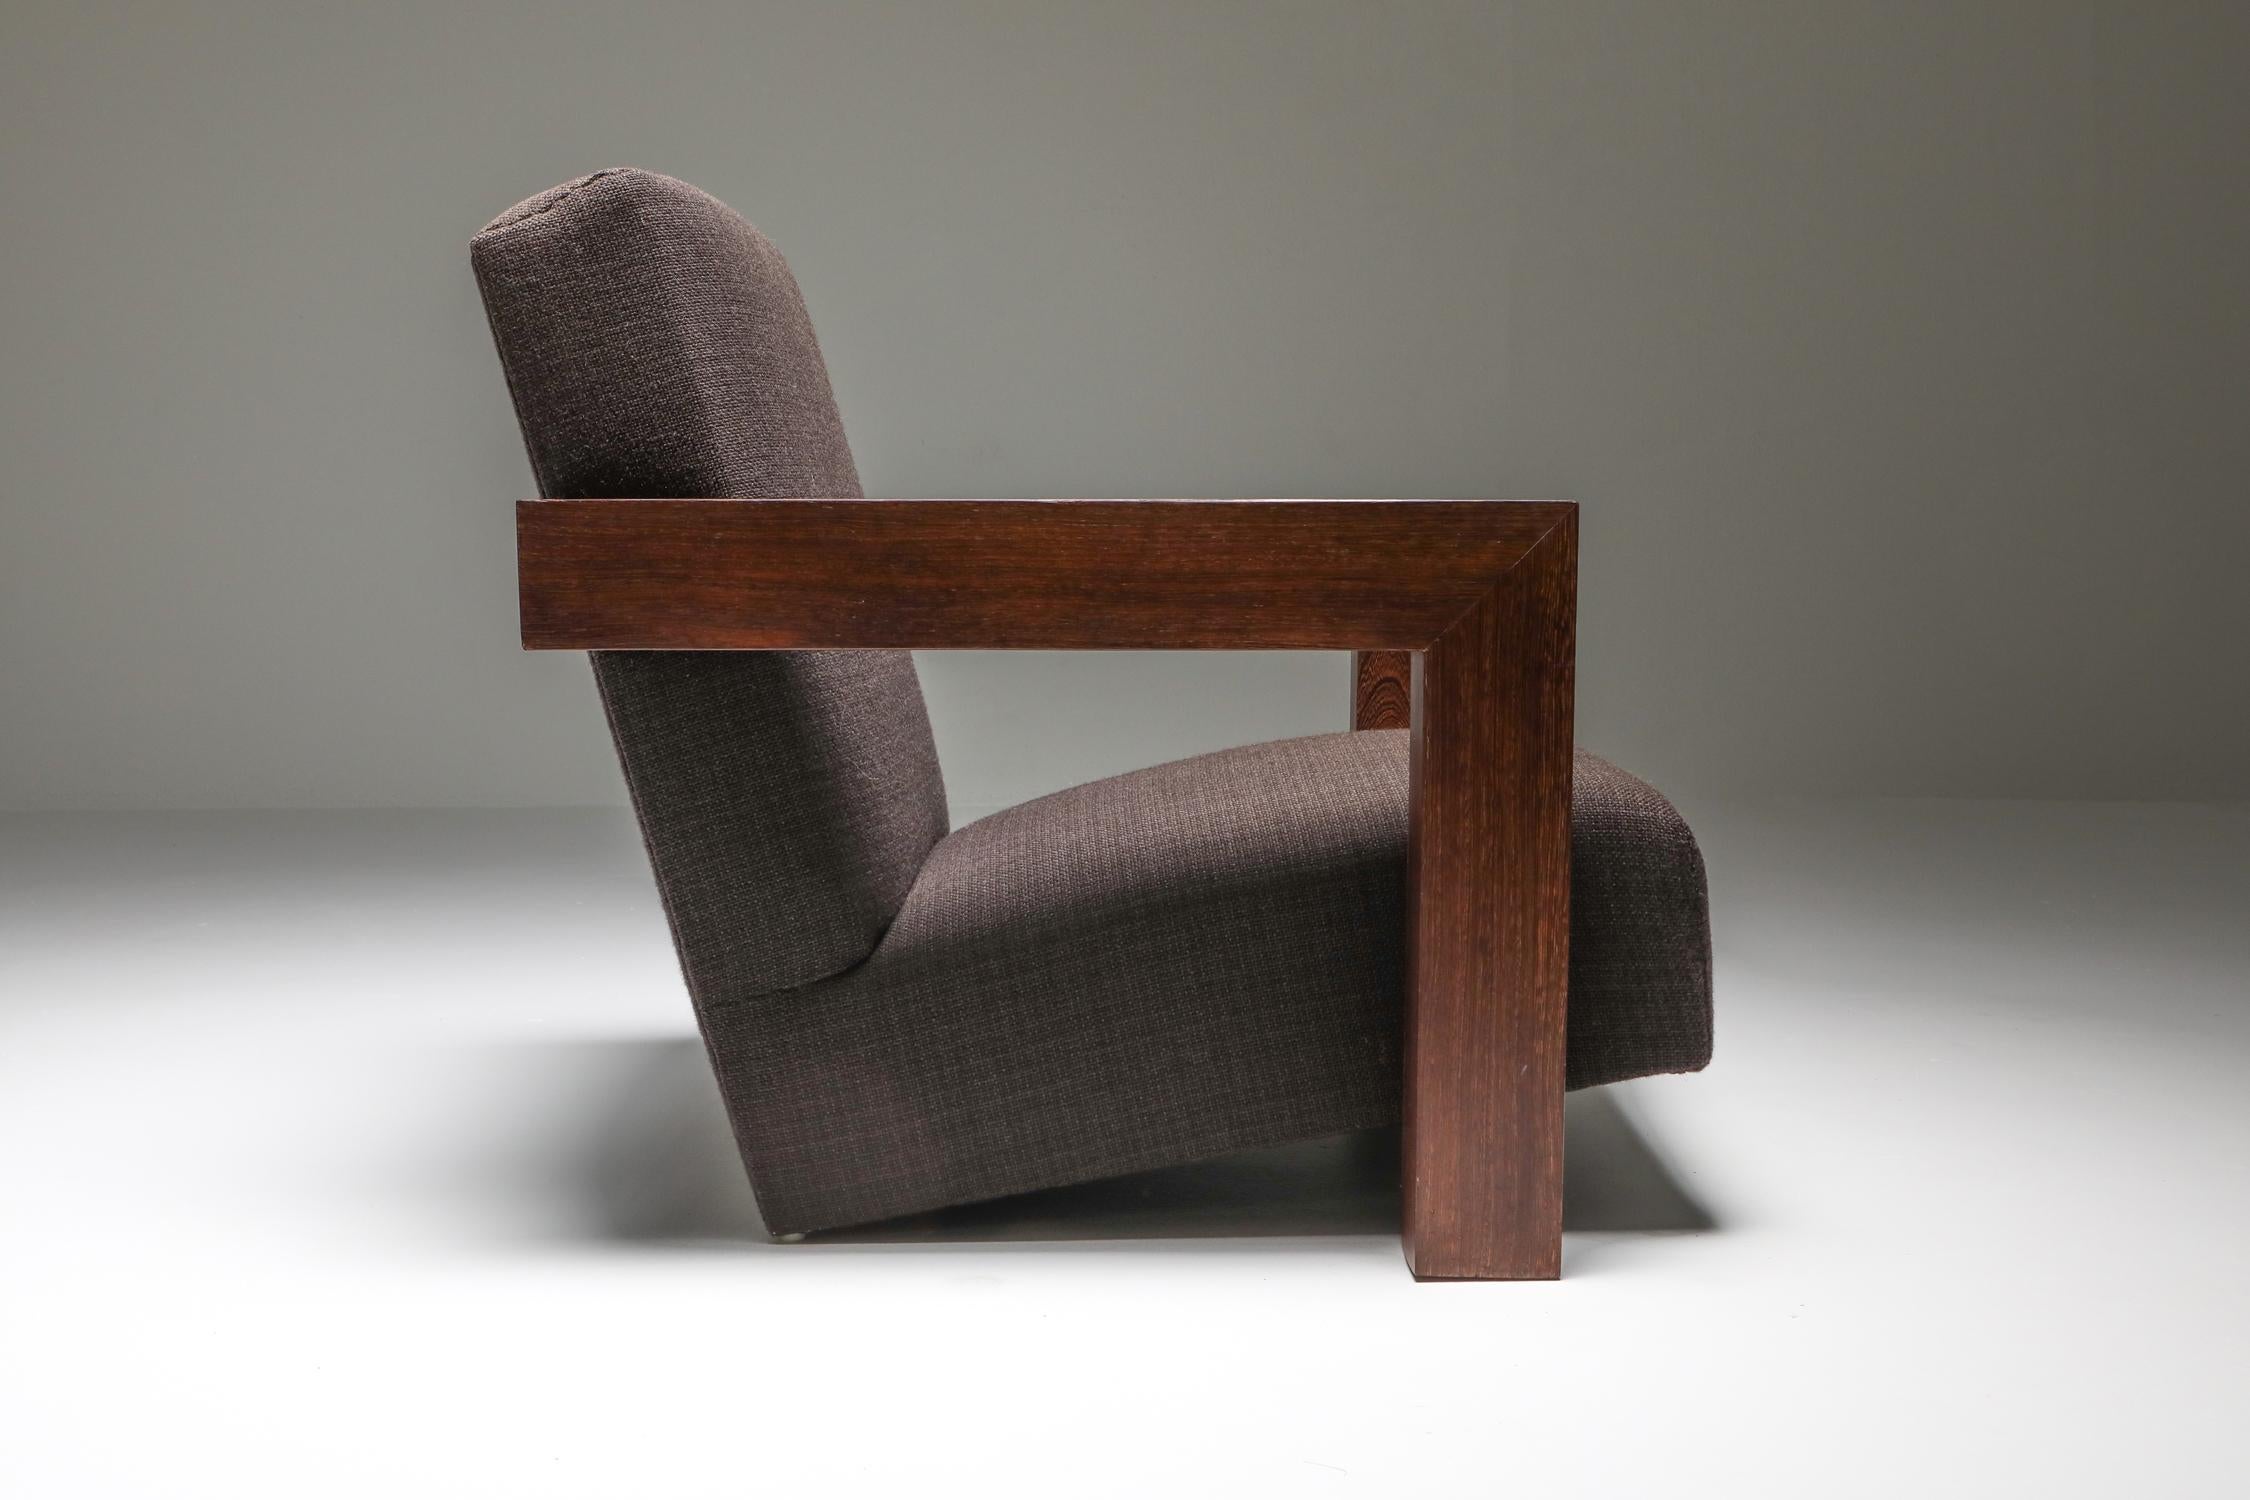 Rietveld's Utrecht Chair with a Wooden Frame, a Pair 3